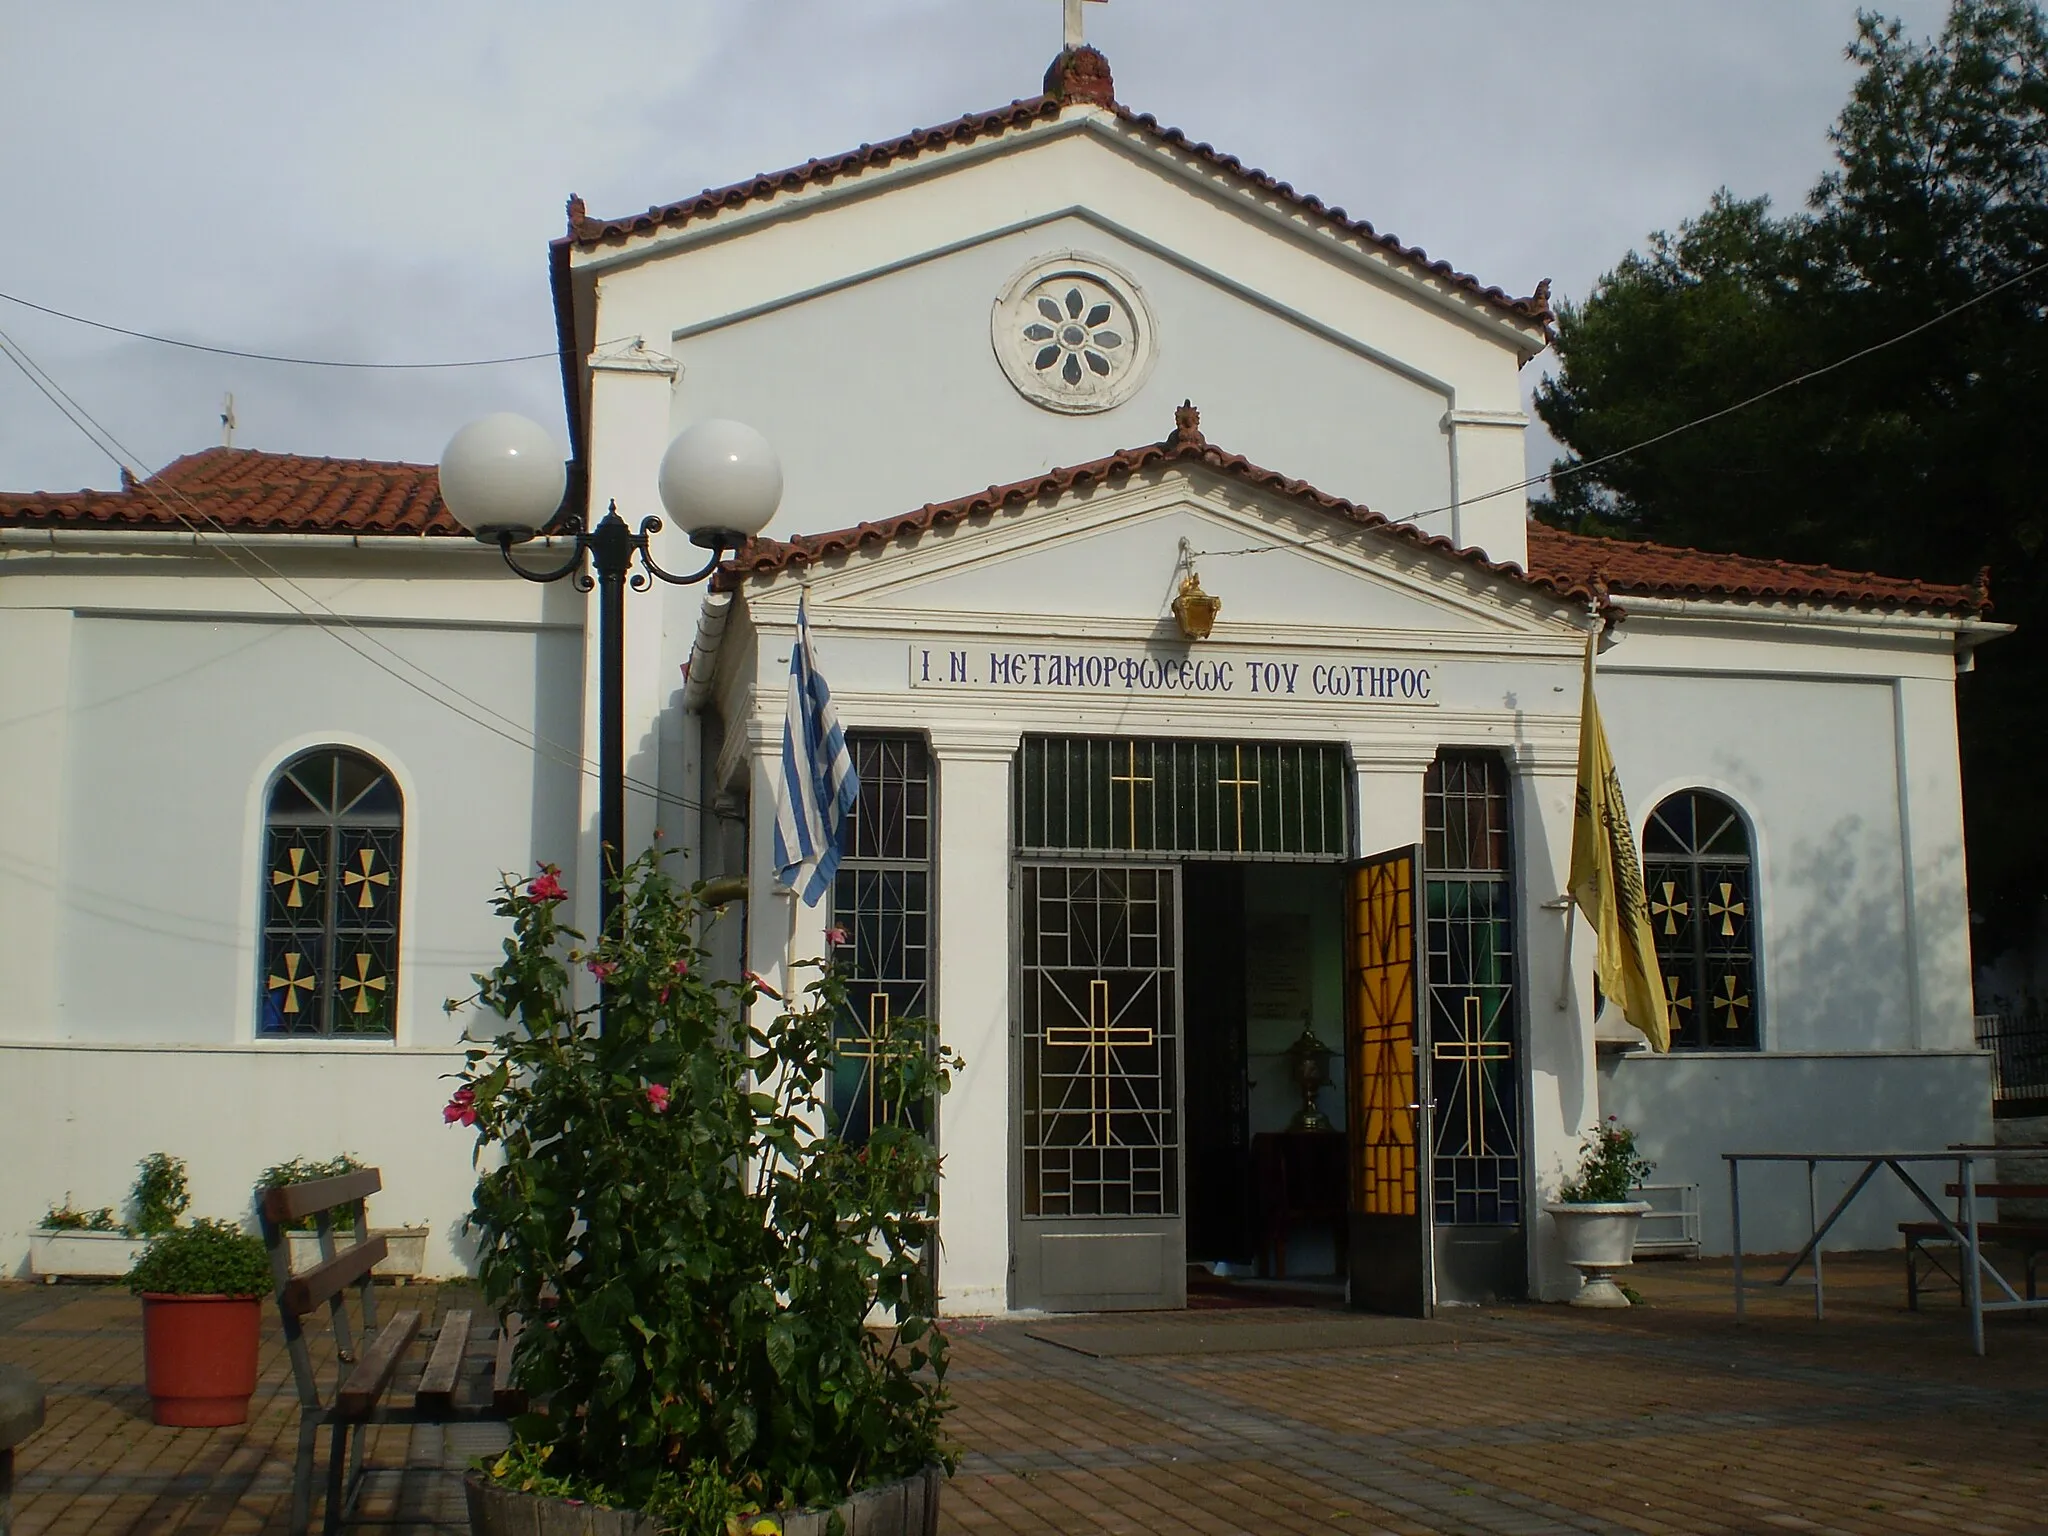 Photo showing: Church in Atalanti Fthiotis, Central Greece